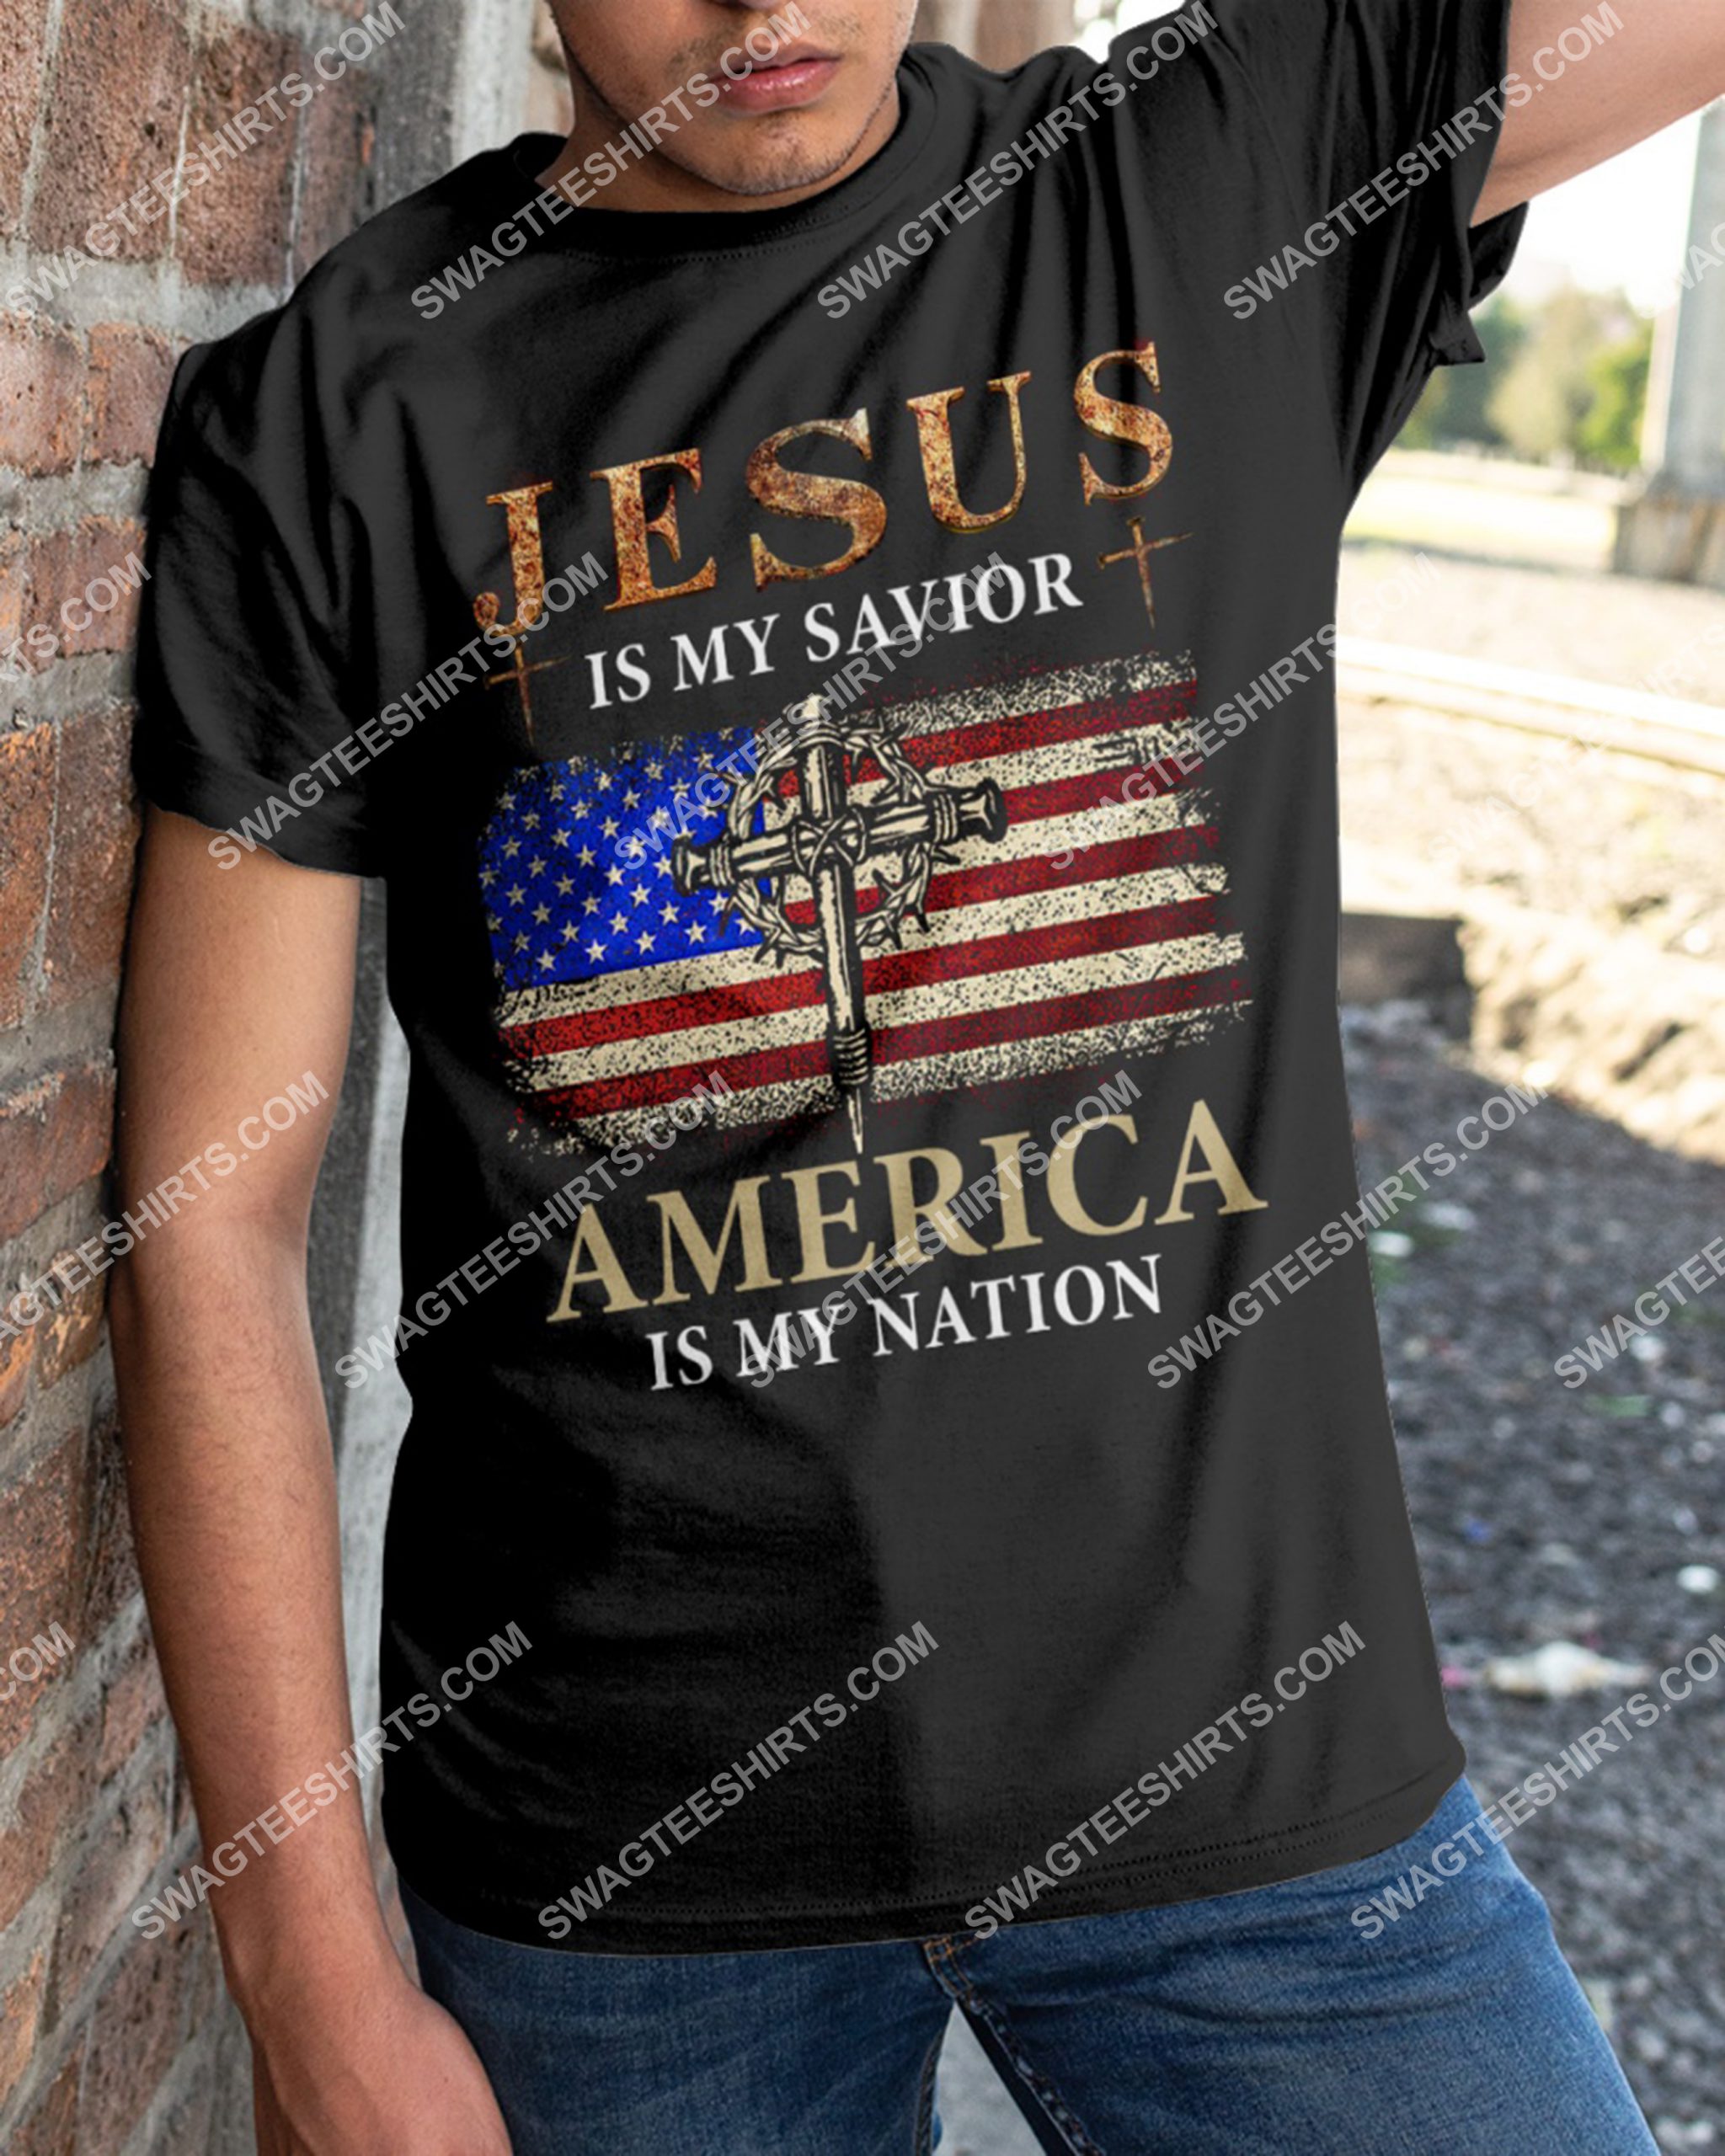 Jesus is my savior america is my nation shirt 2(1)